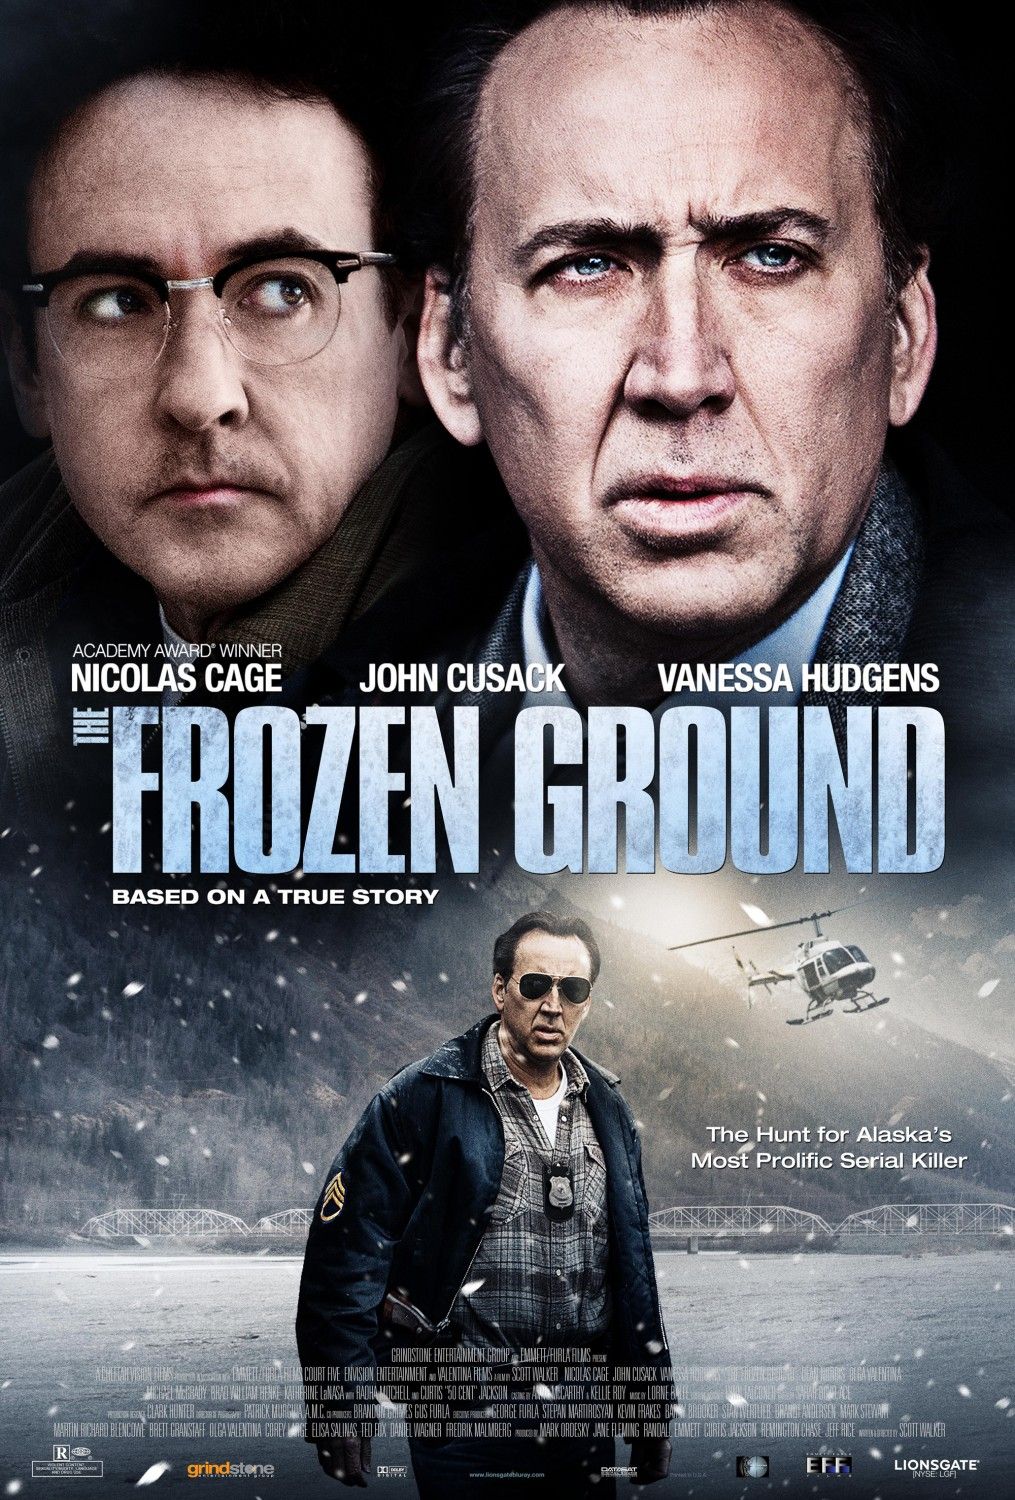 The Frozen Ground (2013) Hindi Dubbed Full Movie